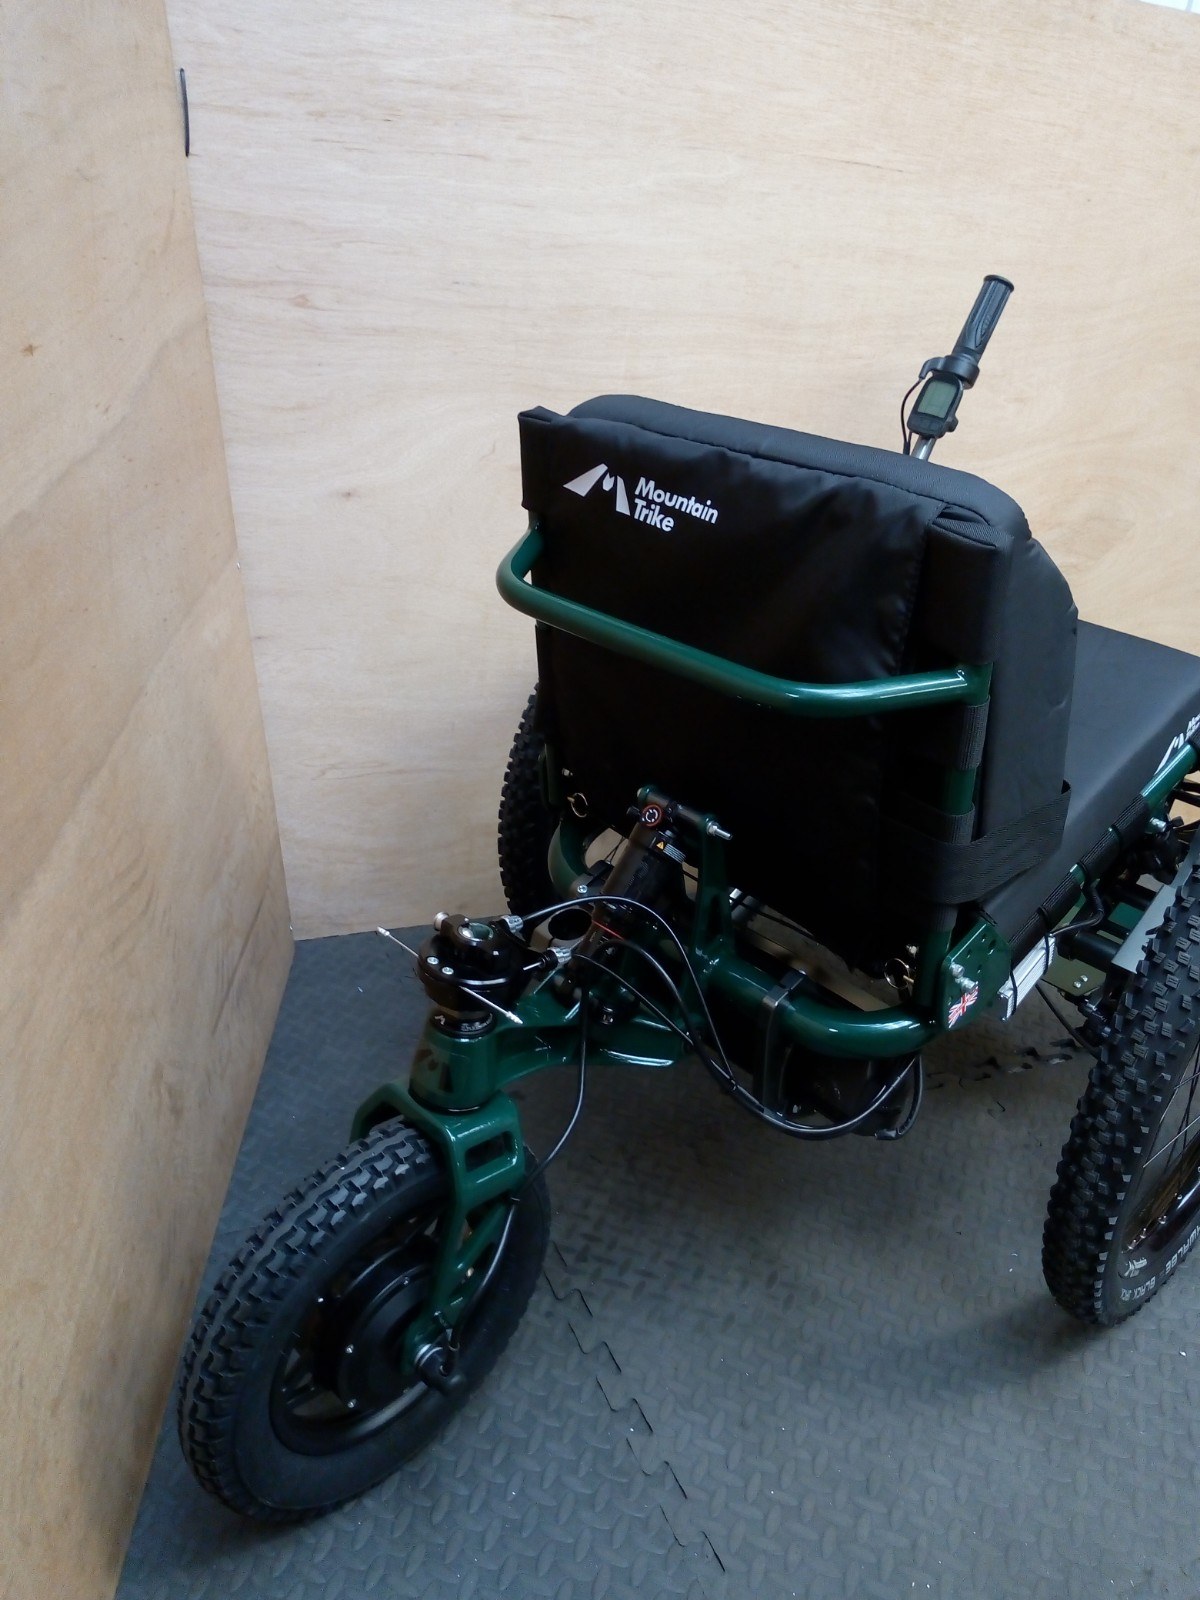 eTrike - electric power assist wheelchair